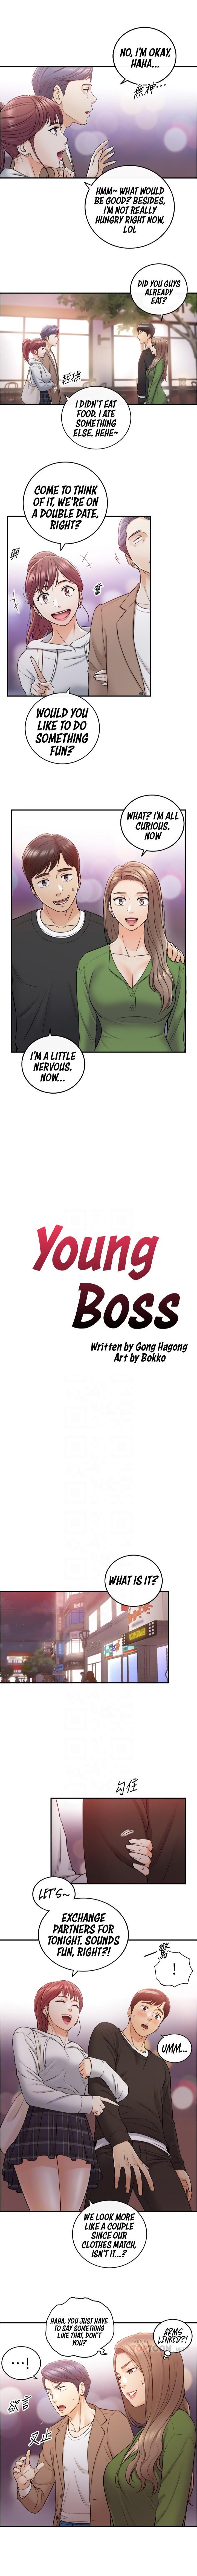 young-boss-001-chap-84-1